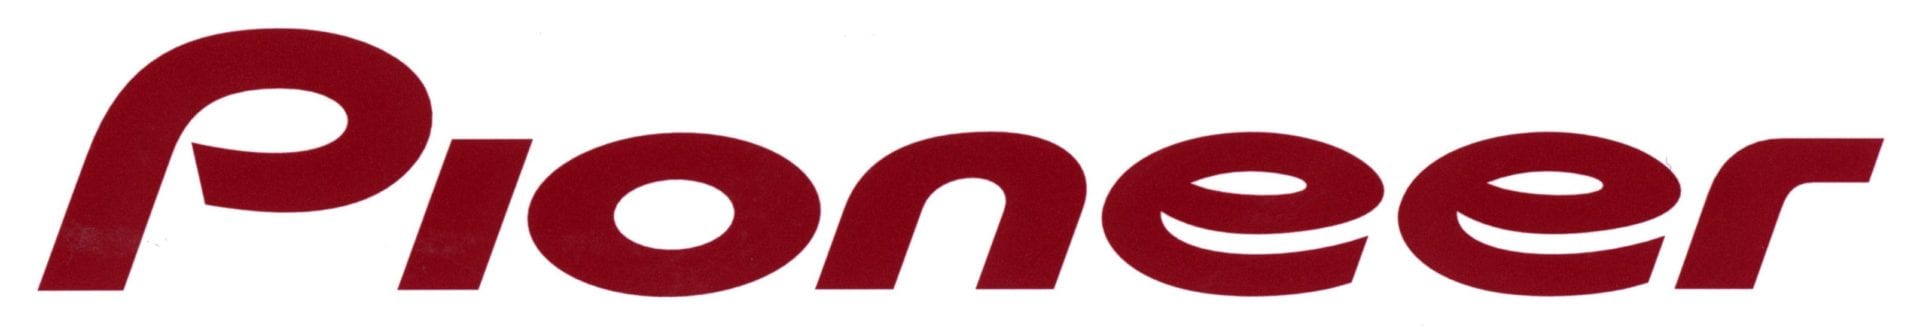 Image result for pioneer logo